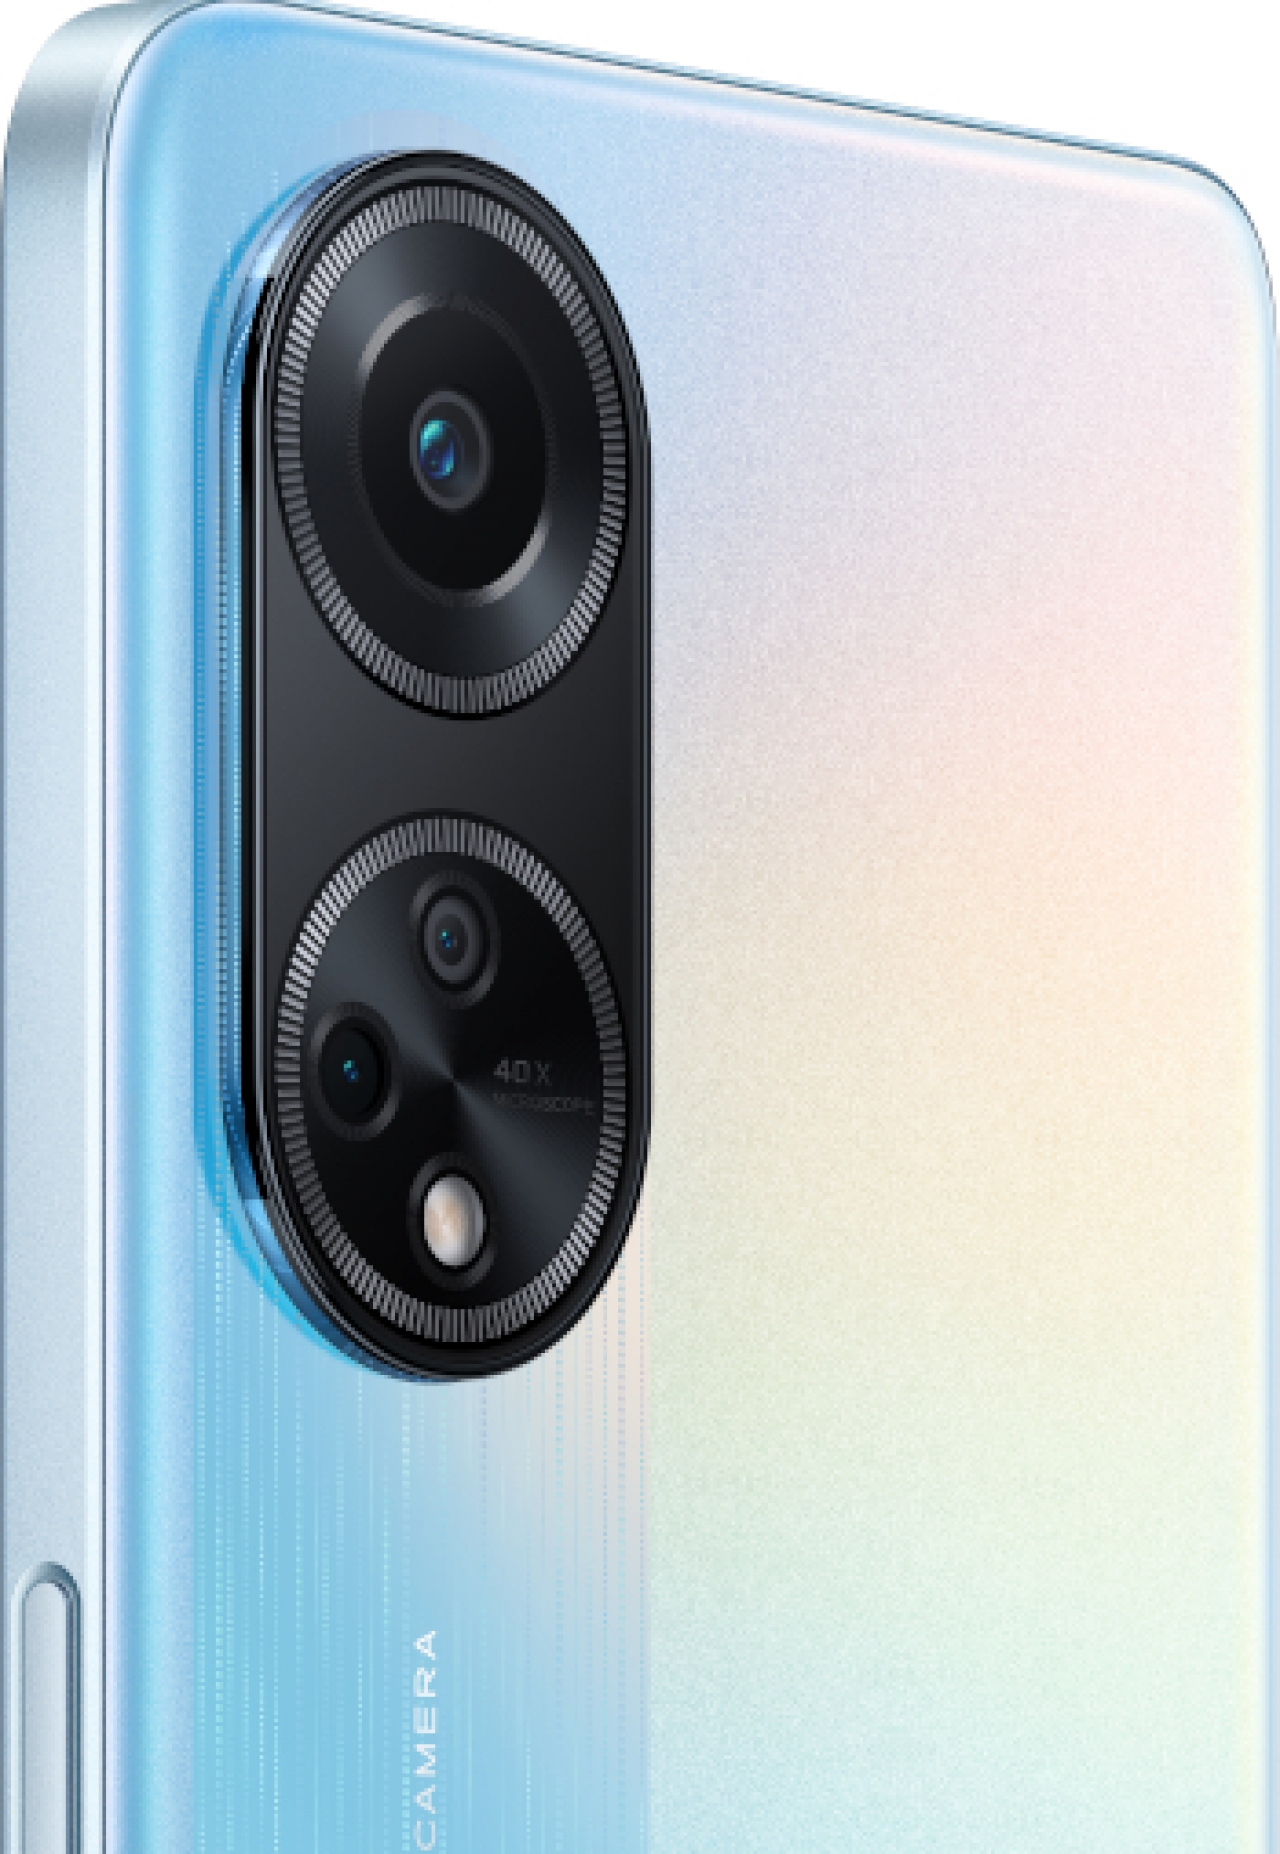 Huawei P30 Pro review: game-changing camera, stellar battery life